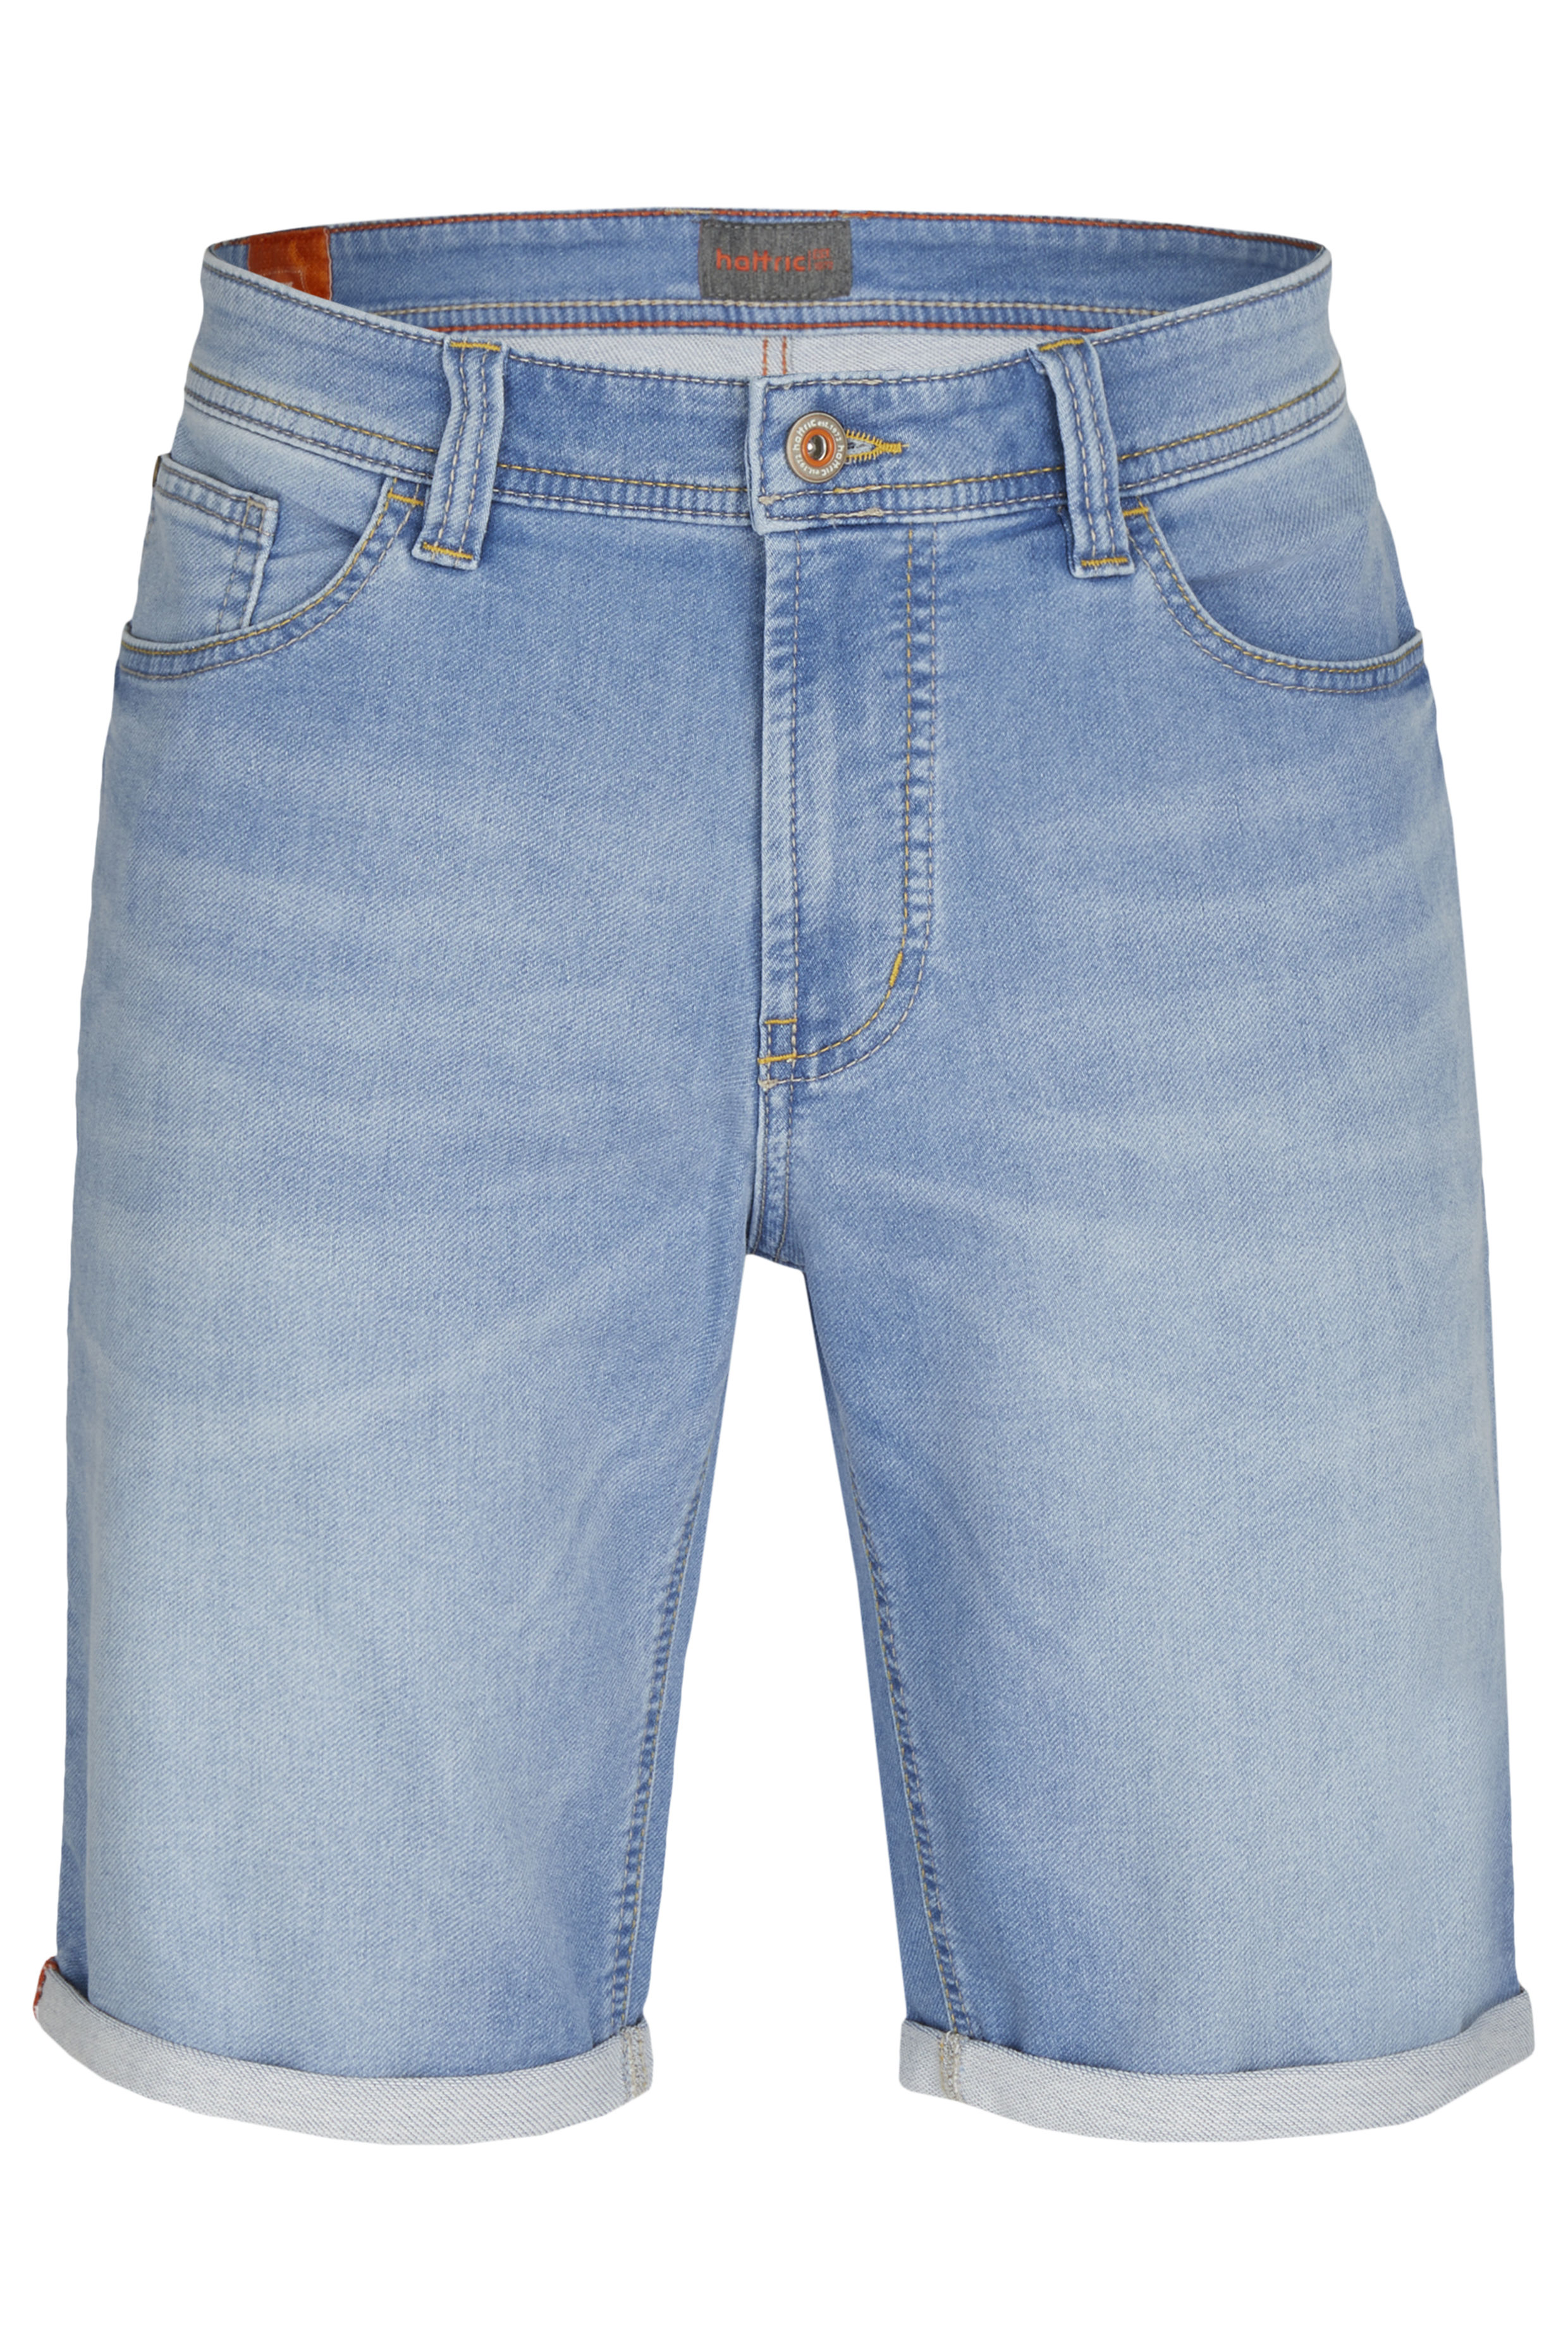 Orange Red Herren 5-Pocket Jeans Shorts in Jeansblau 